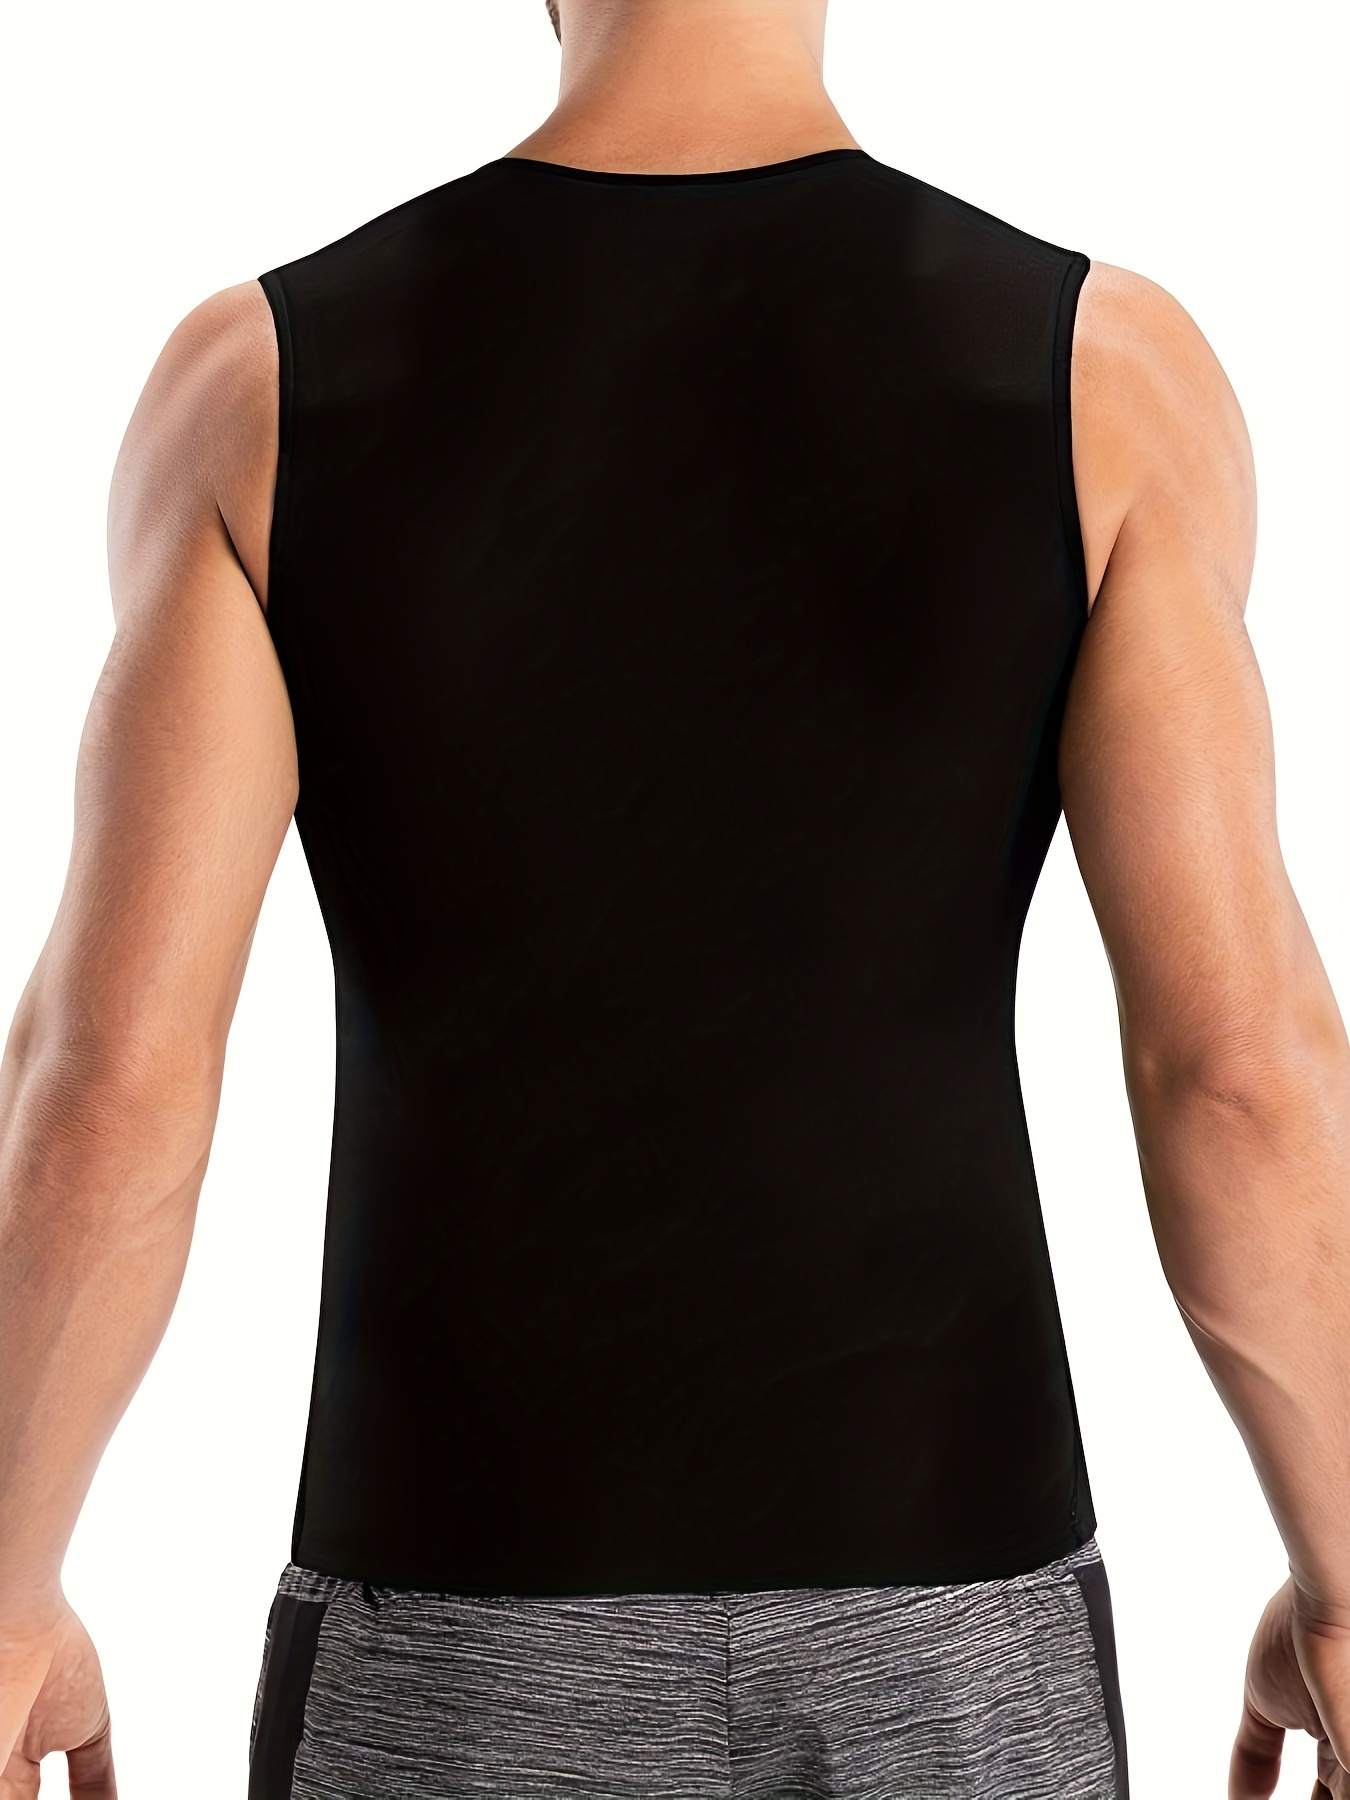 Neoprene Tank Top Shapewear Slimming Waist Trainer Sport Vest for